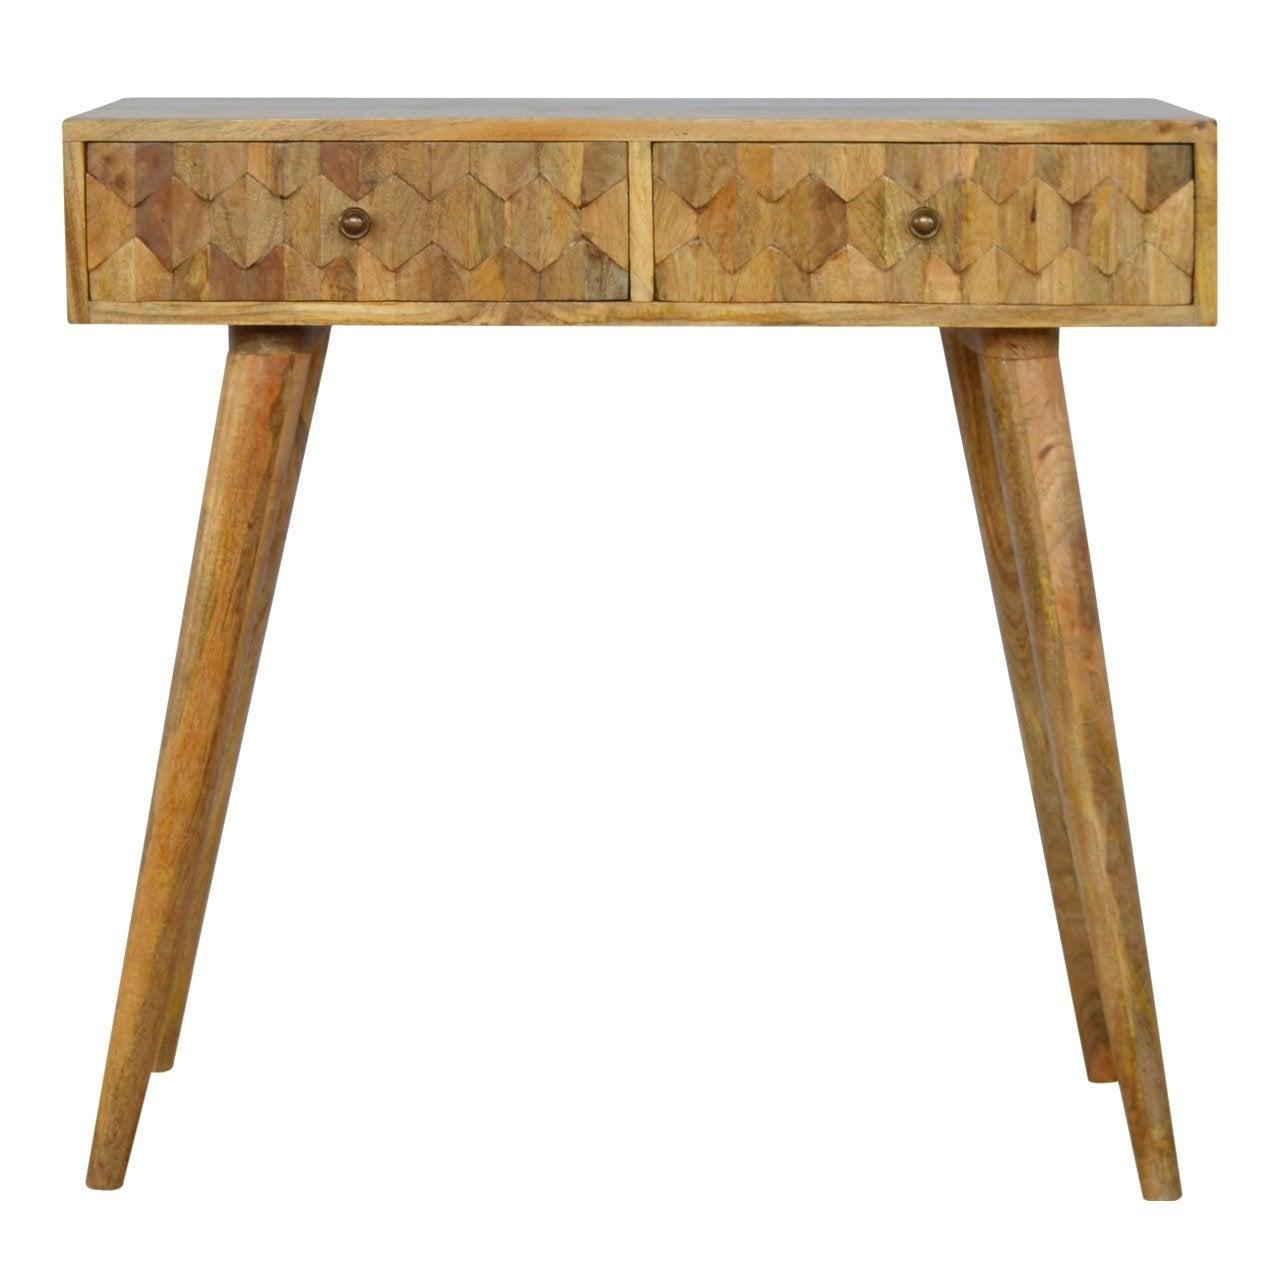 Pineapple carved console table - crimblefest furniture - image 1